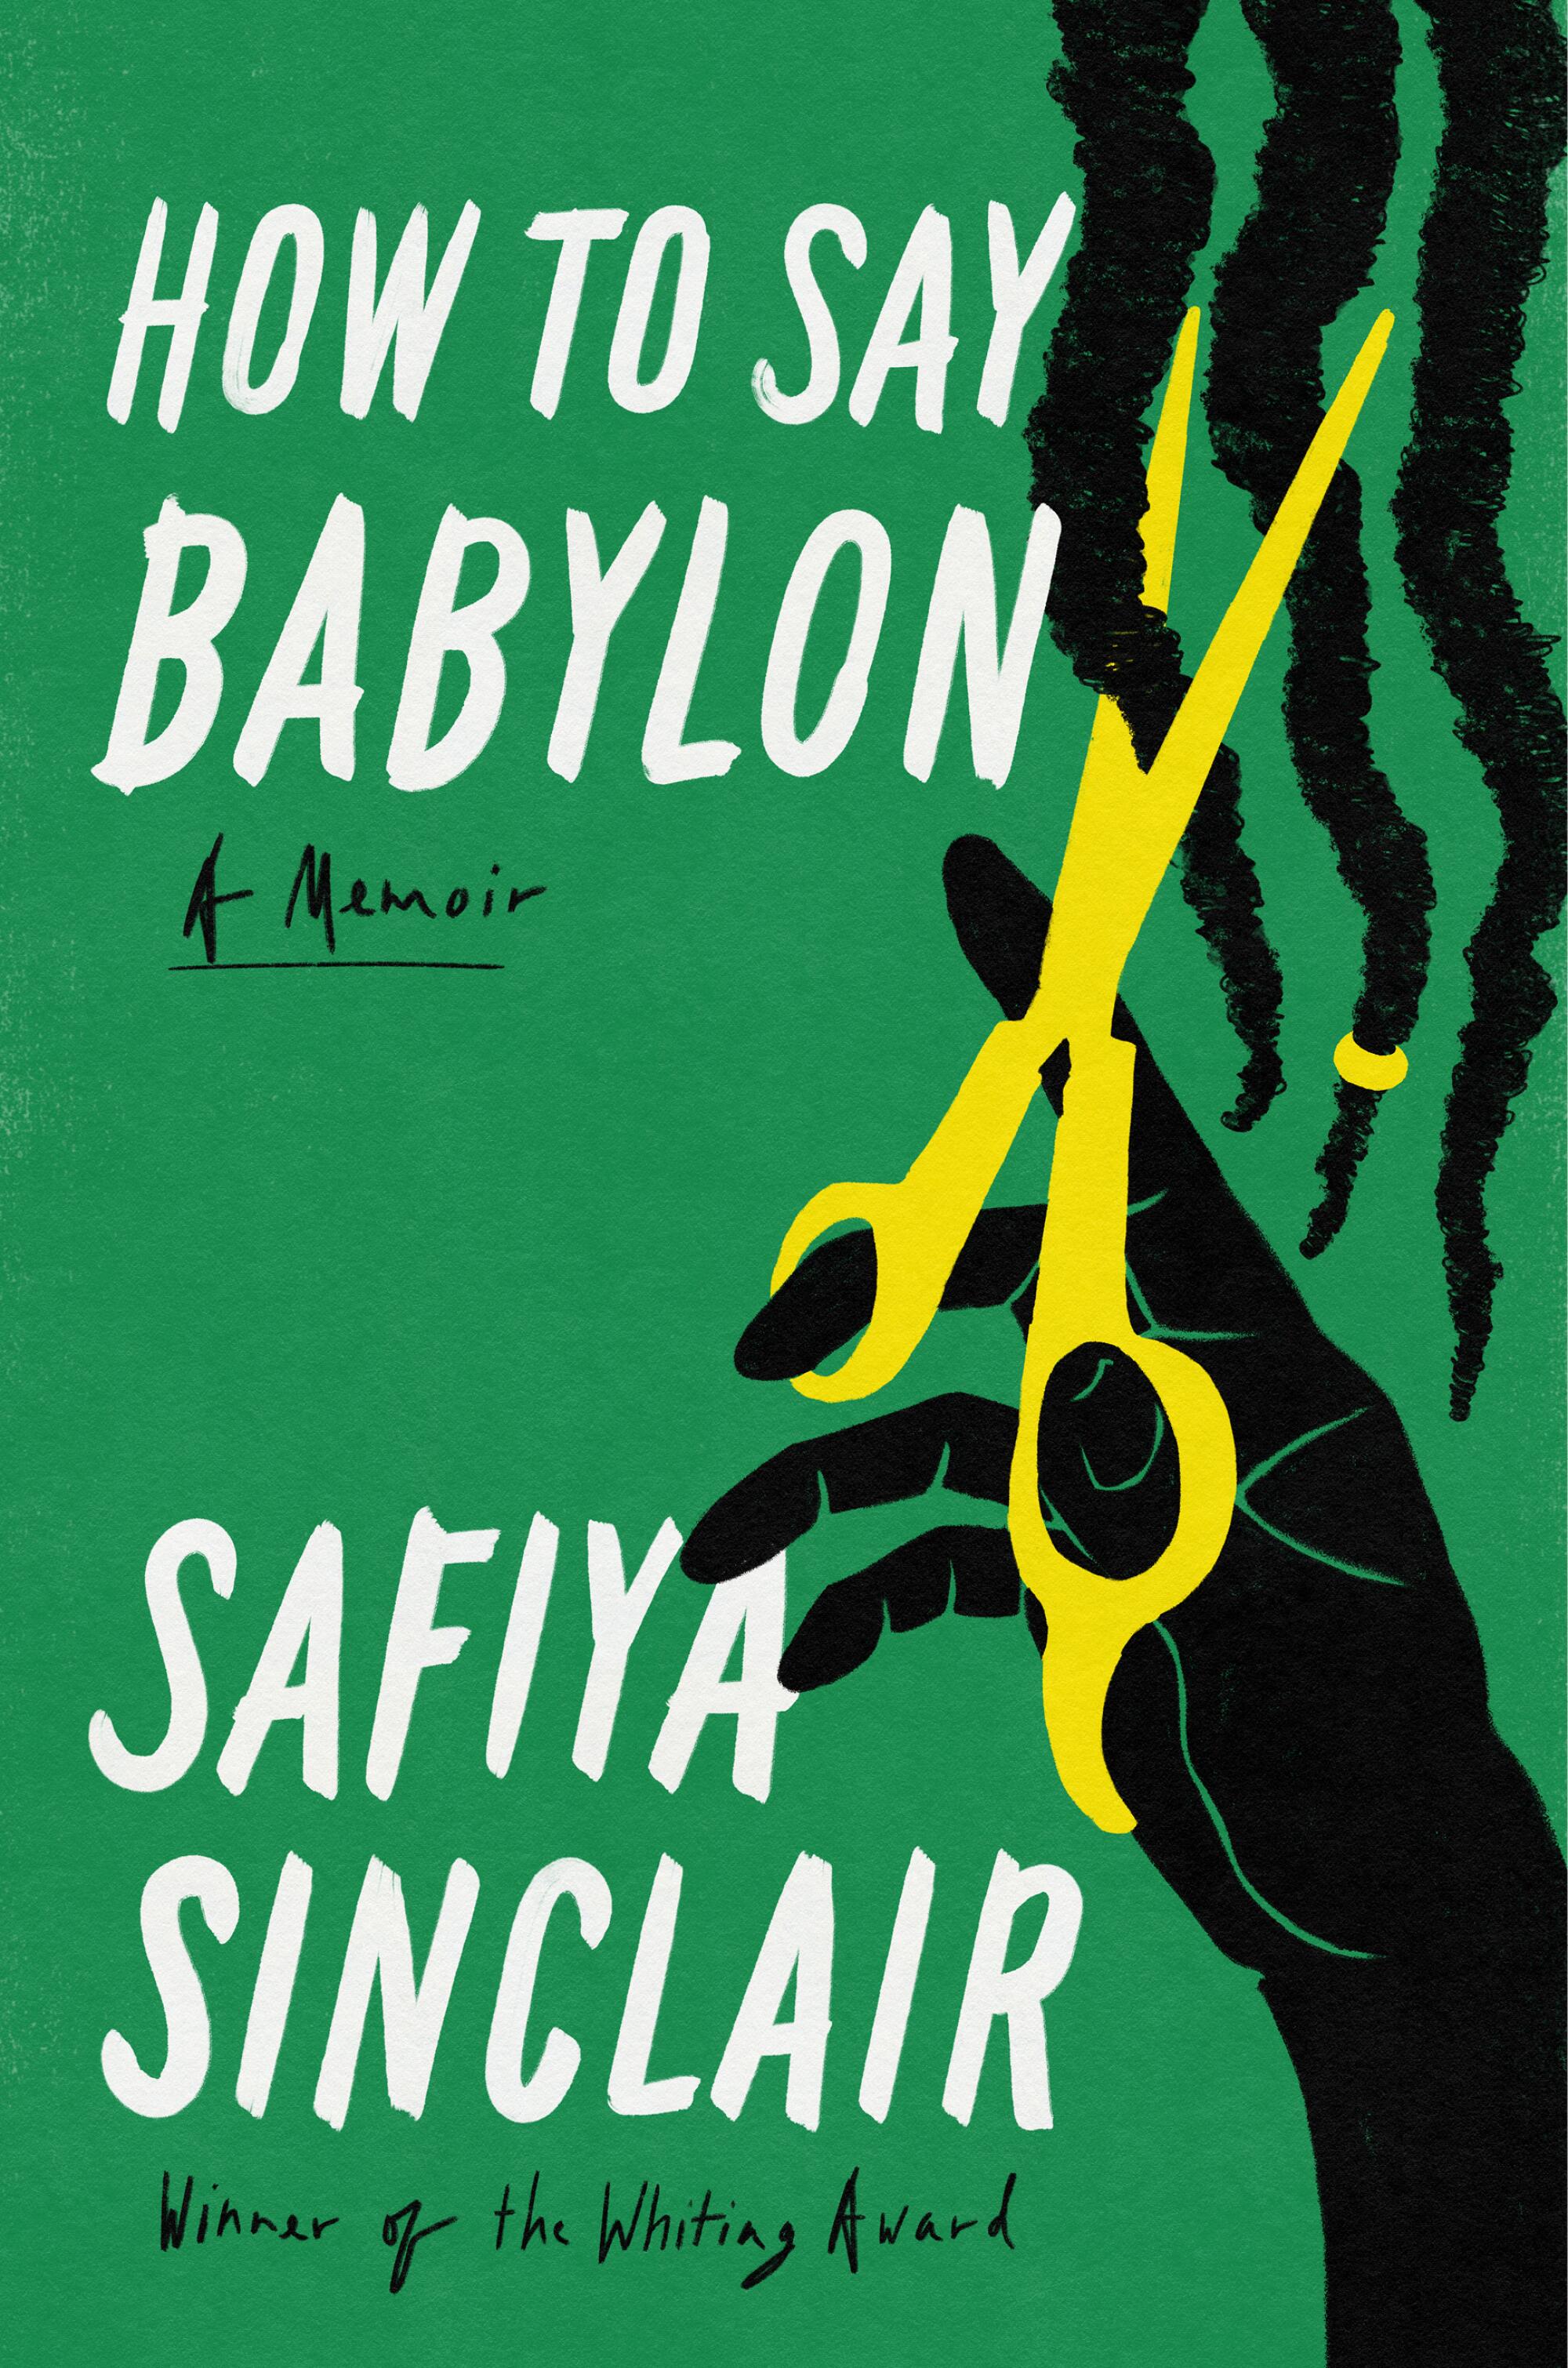 "How to Say Babylon," by Safiya Sinclair